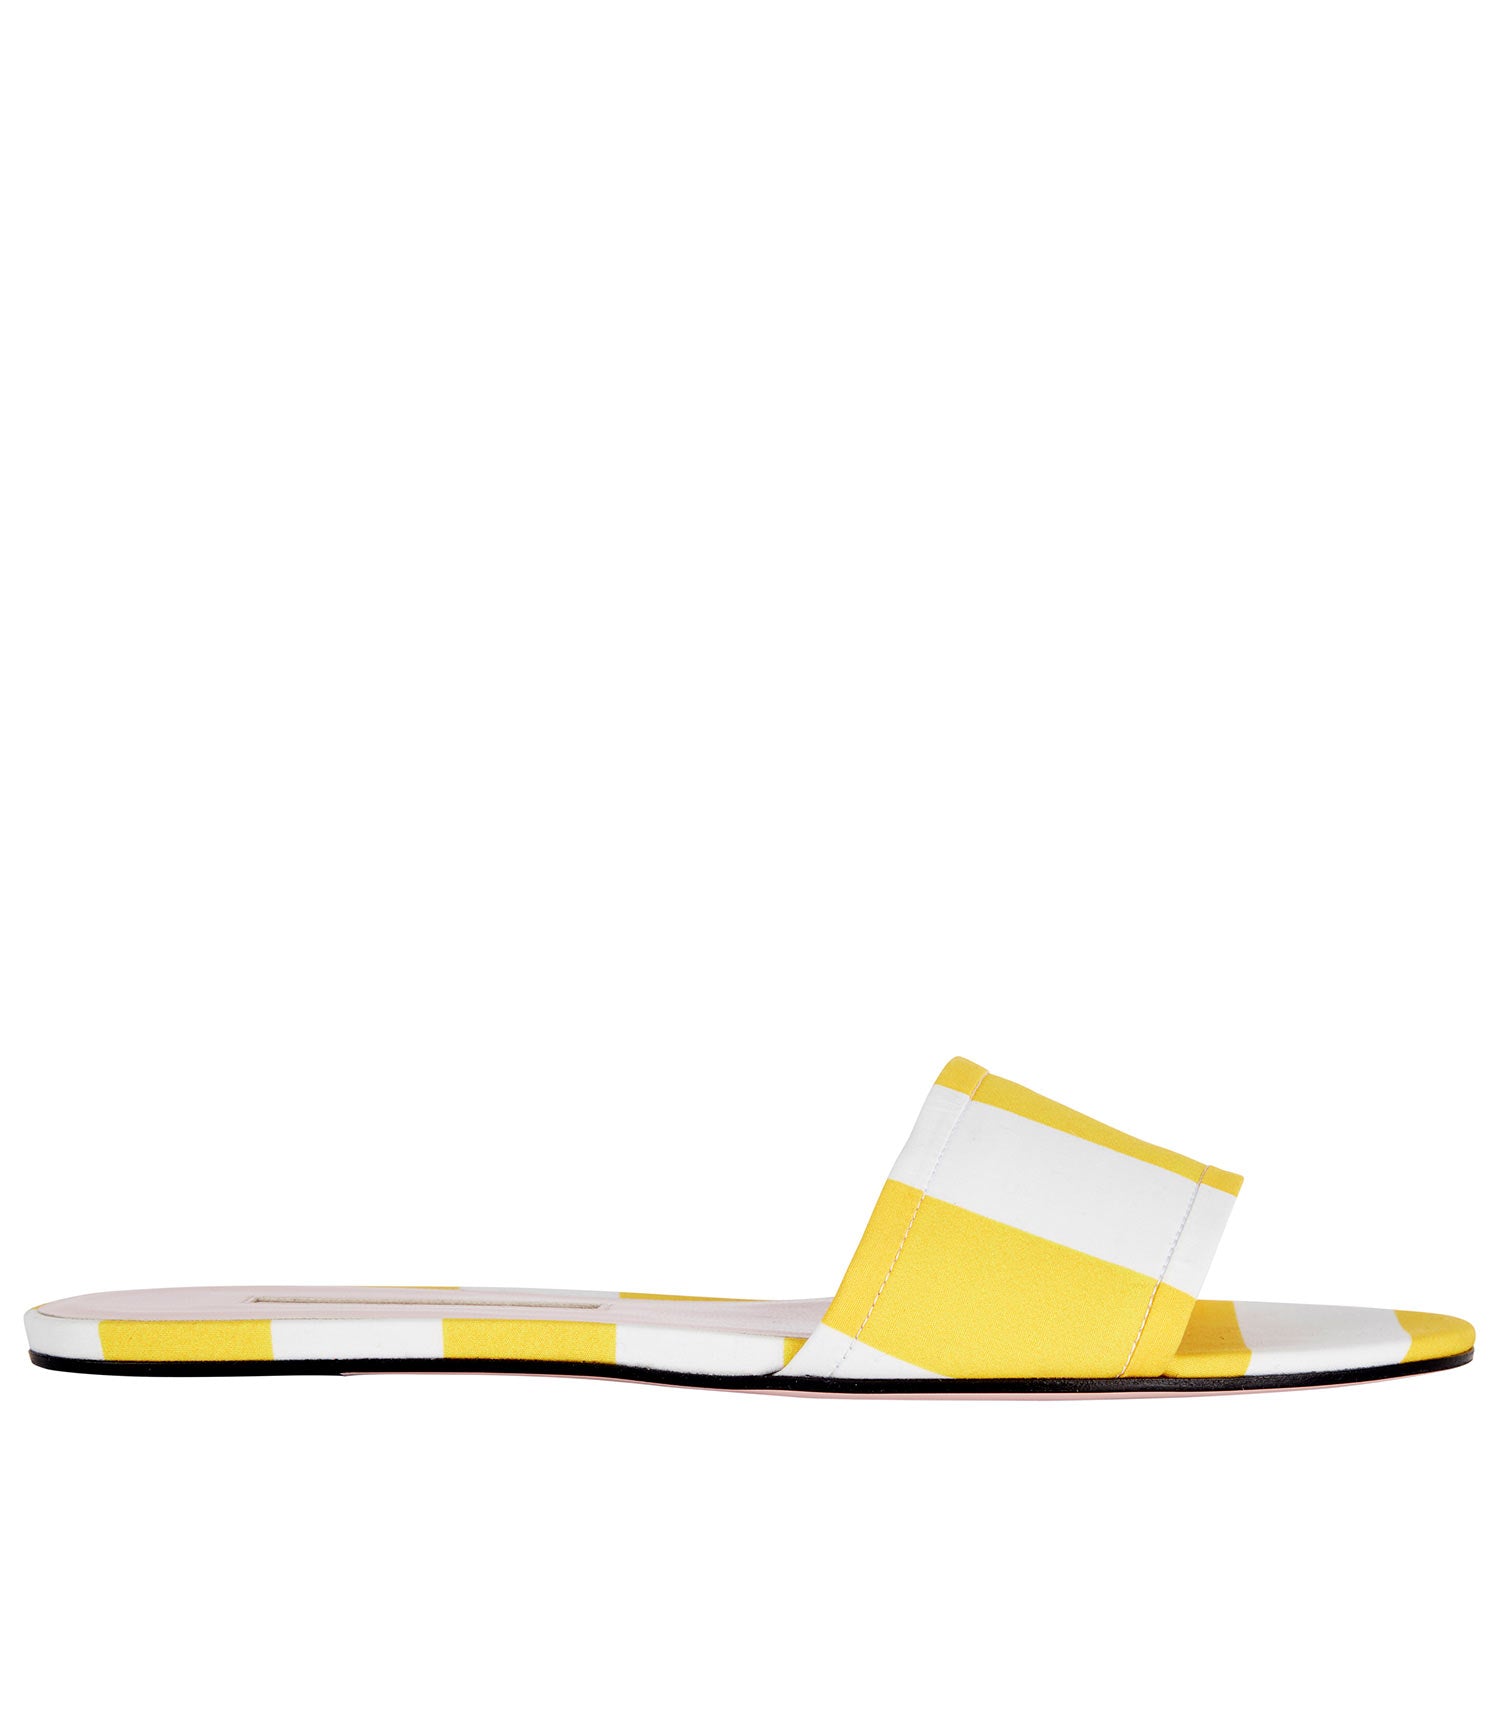 Alfreda Slides | Sirenuse Yellow and White Stripe Pool Slides | Emilia Wickstead